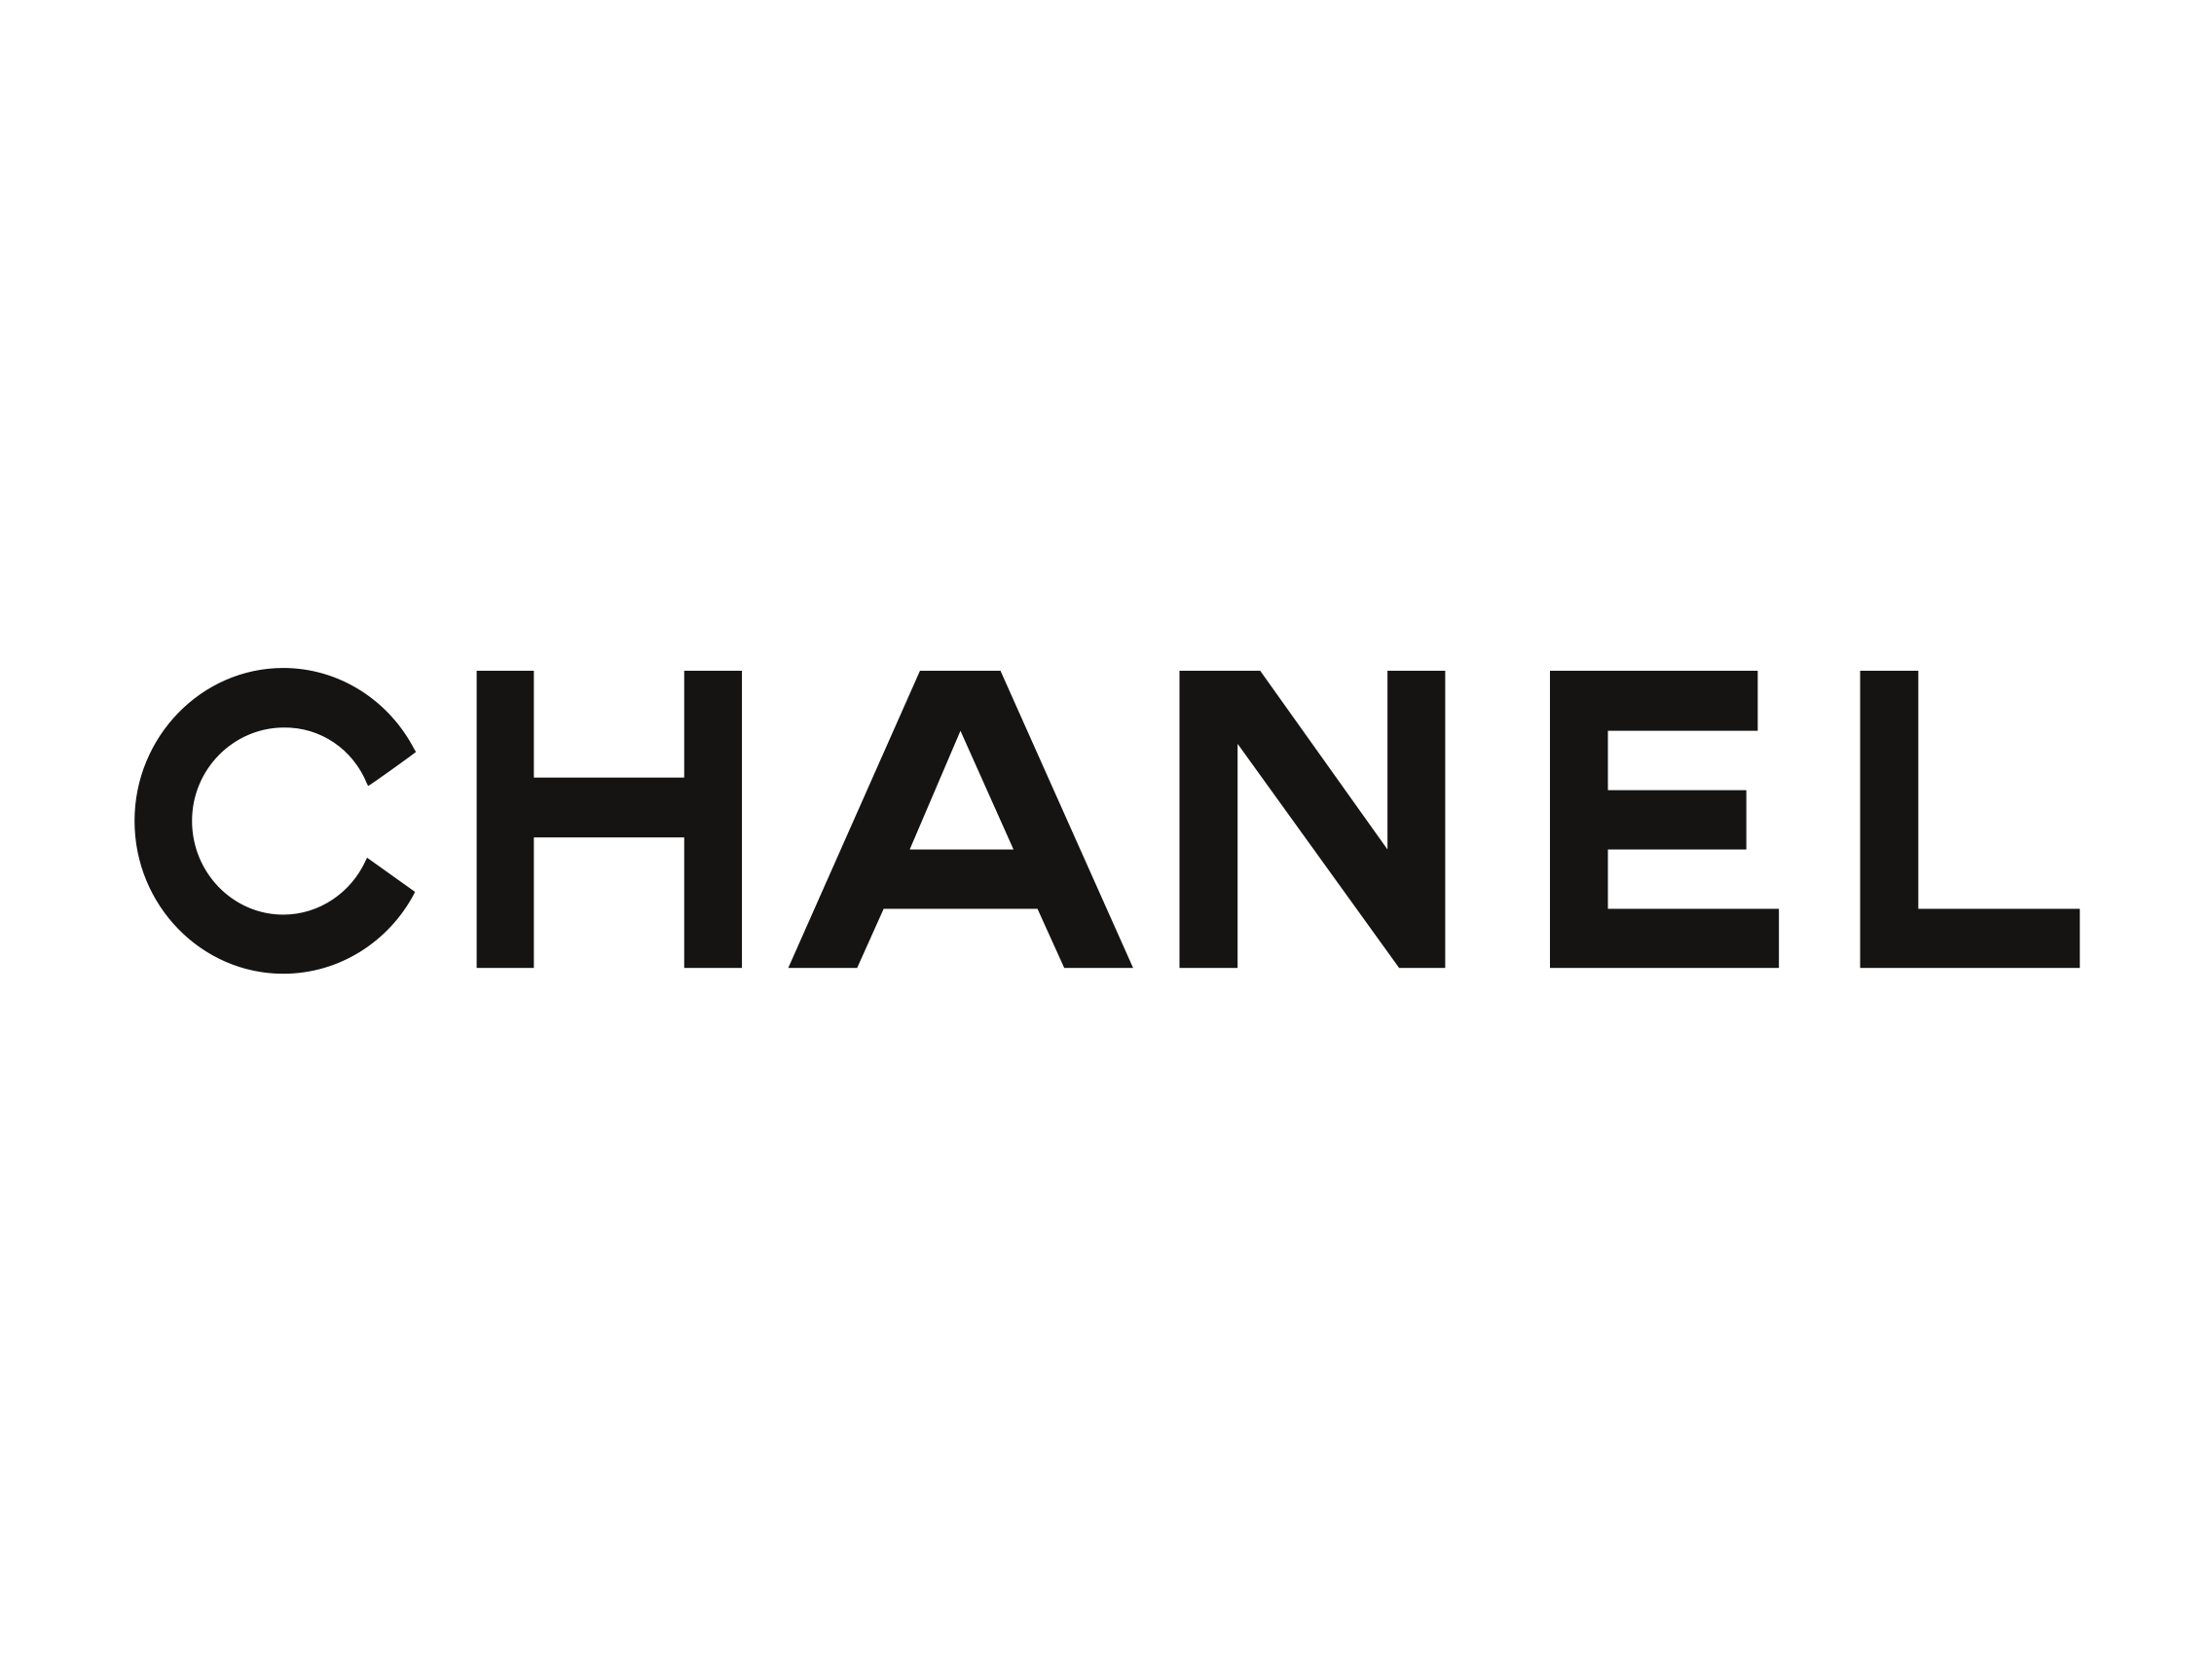 Chanel Makeup Logo - chanel logo mania. Chanel logo